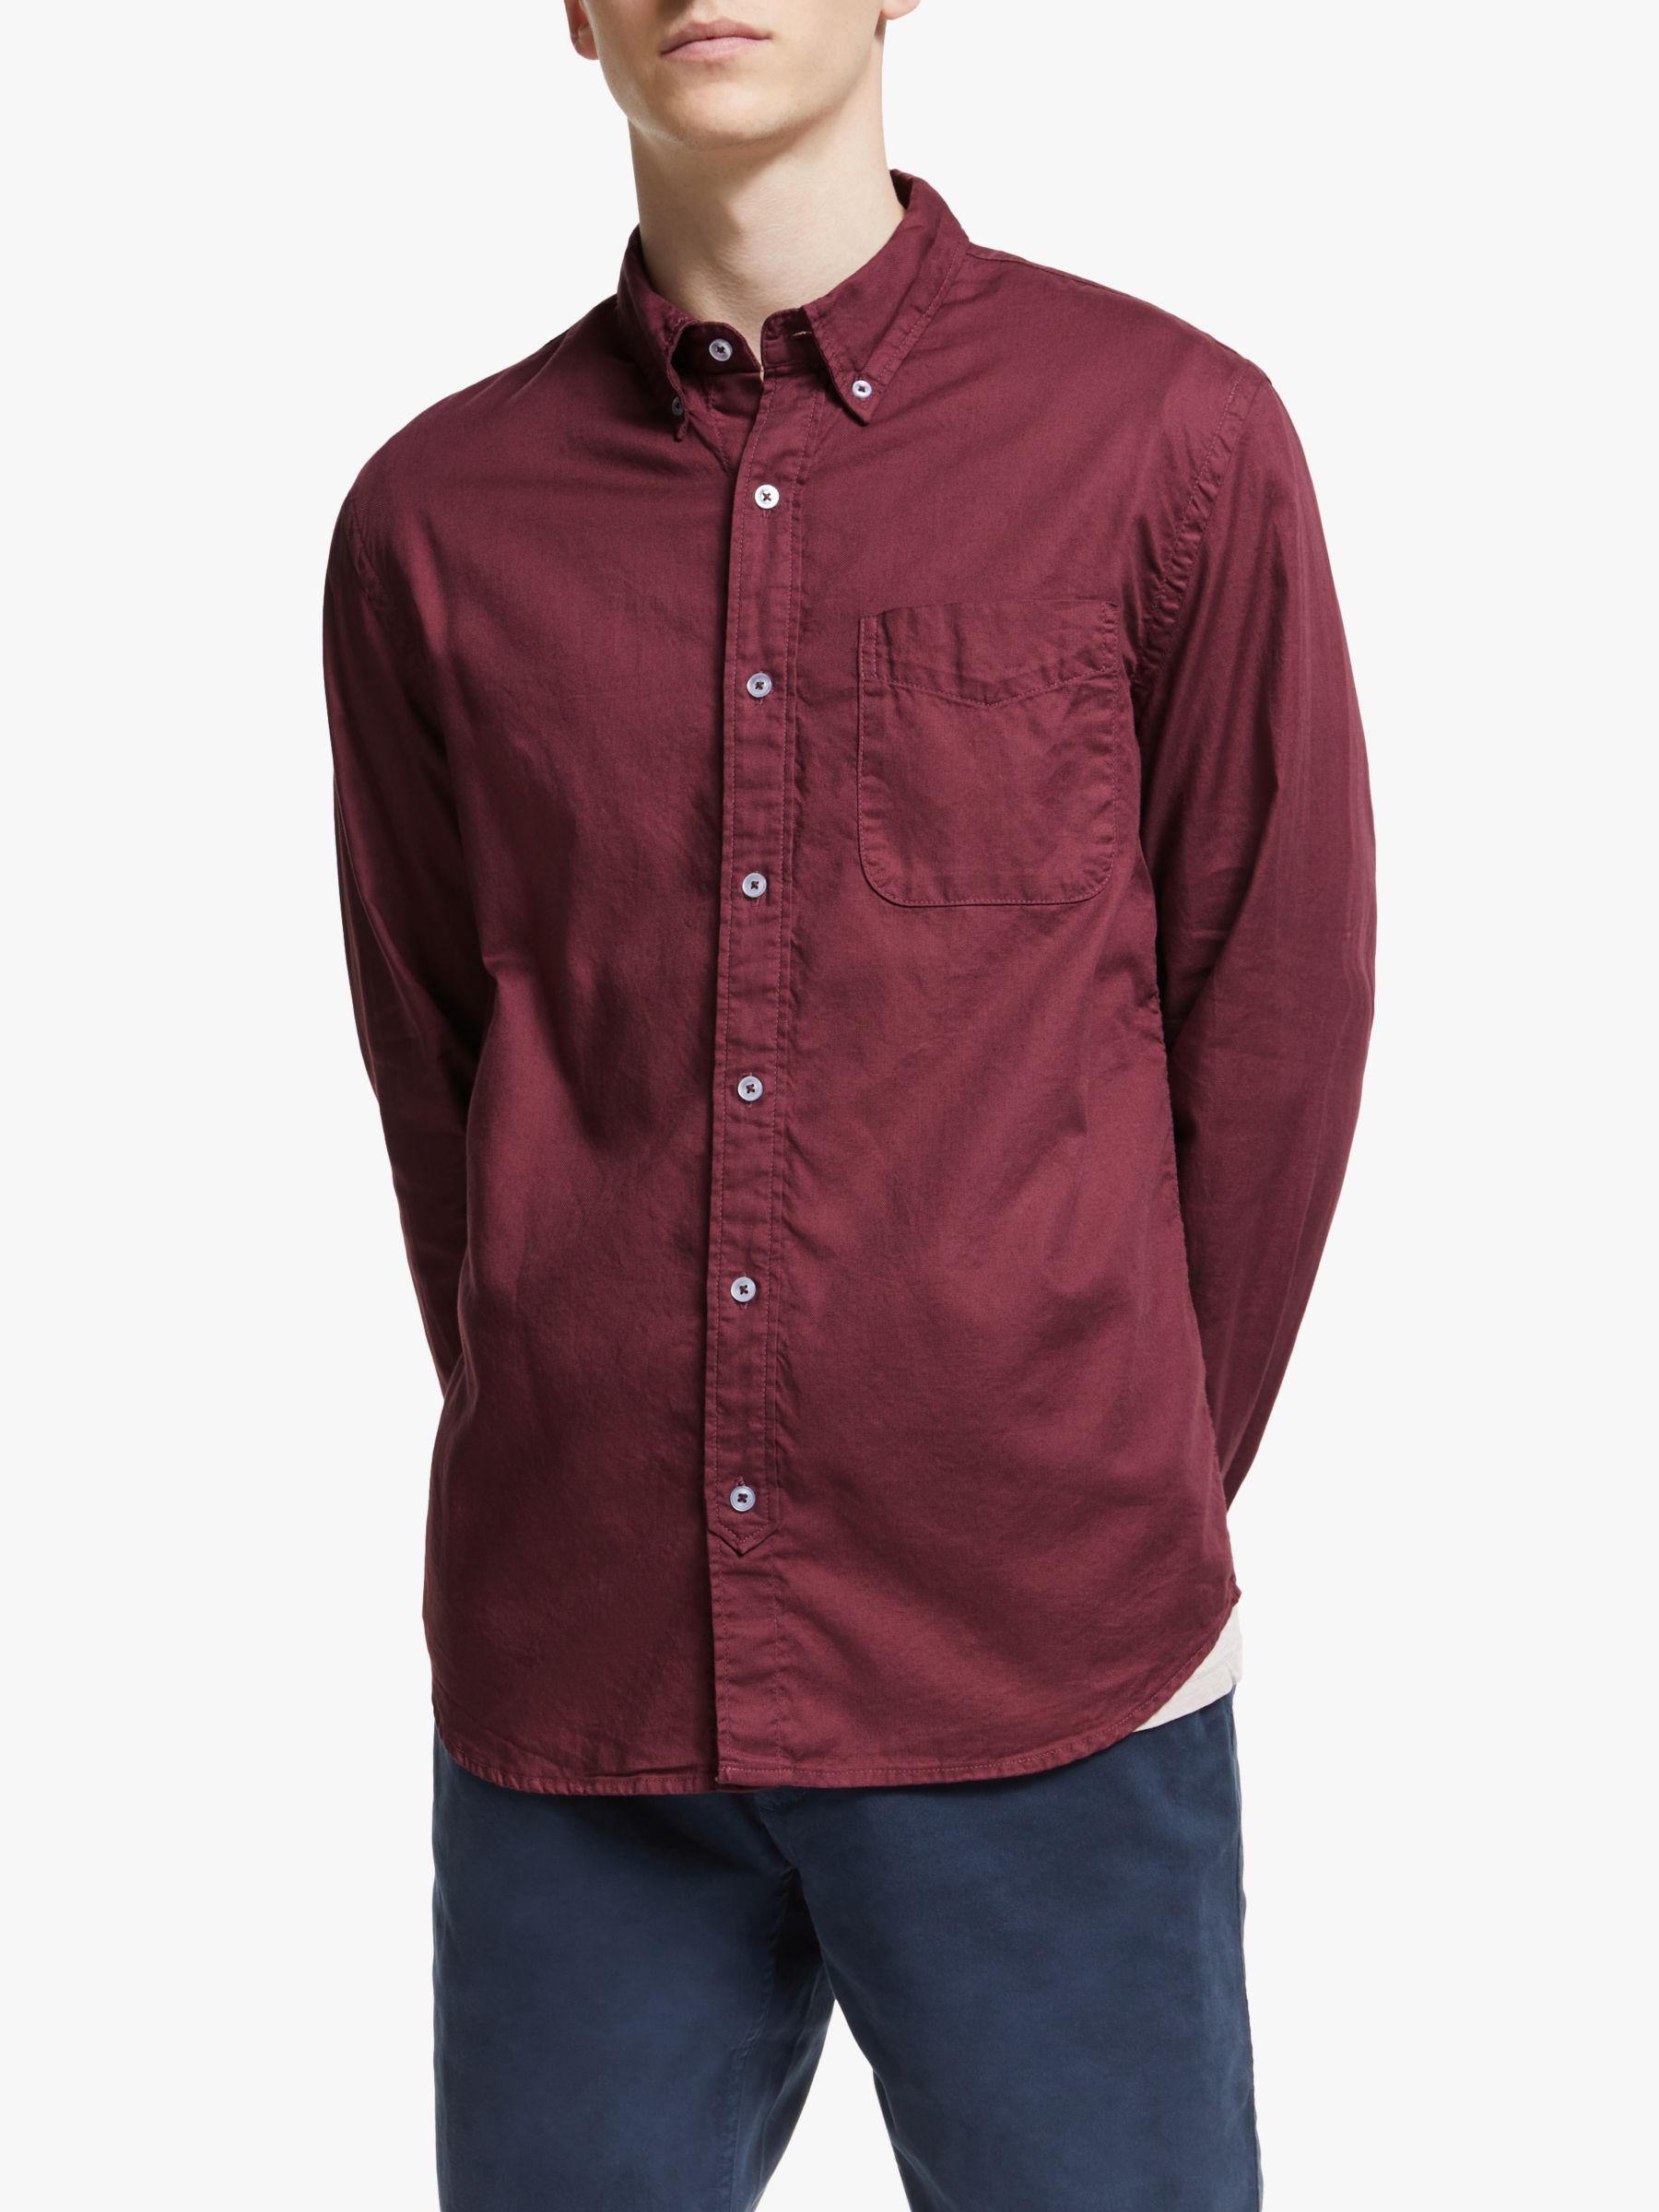 Save Khaki United Button Down Collar Oxford Shirt